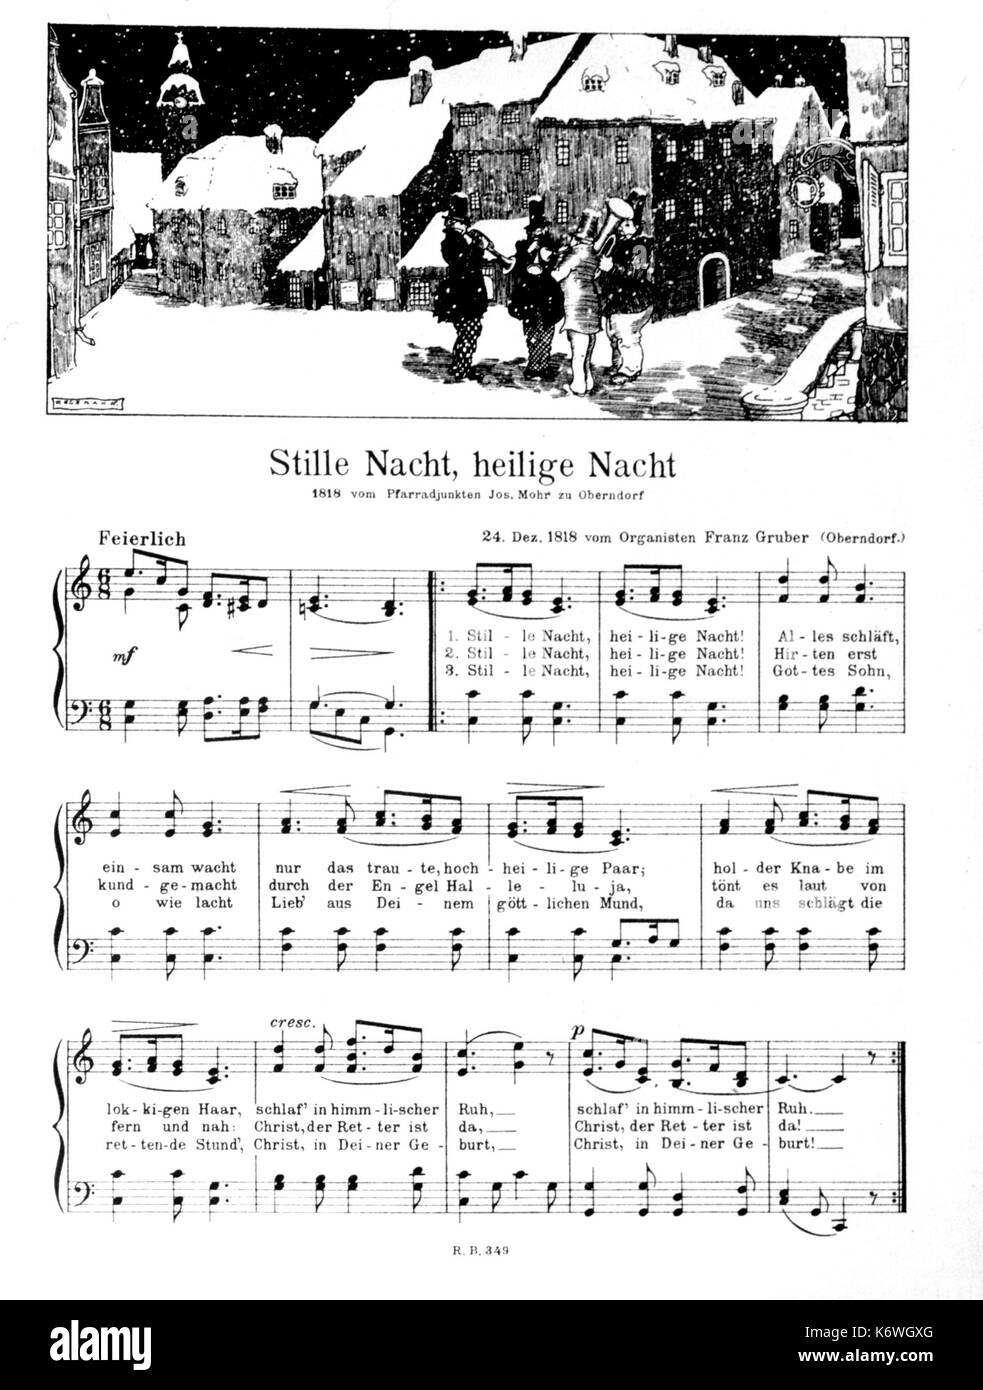 Xmas Carol.  Stille Nacht, heilige Nacht by Franz Gruber 24 Dec 1818.  (Silent Night) Words and music from Weihnacht's Sang und Klang.  Words and score Stock Photo